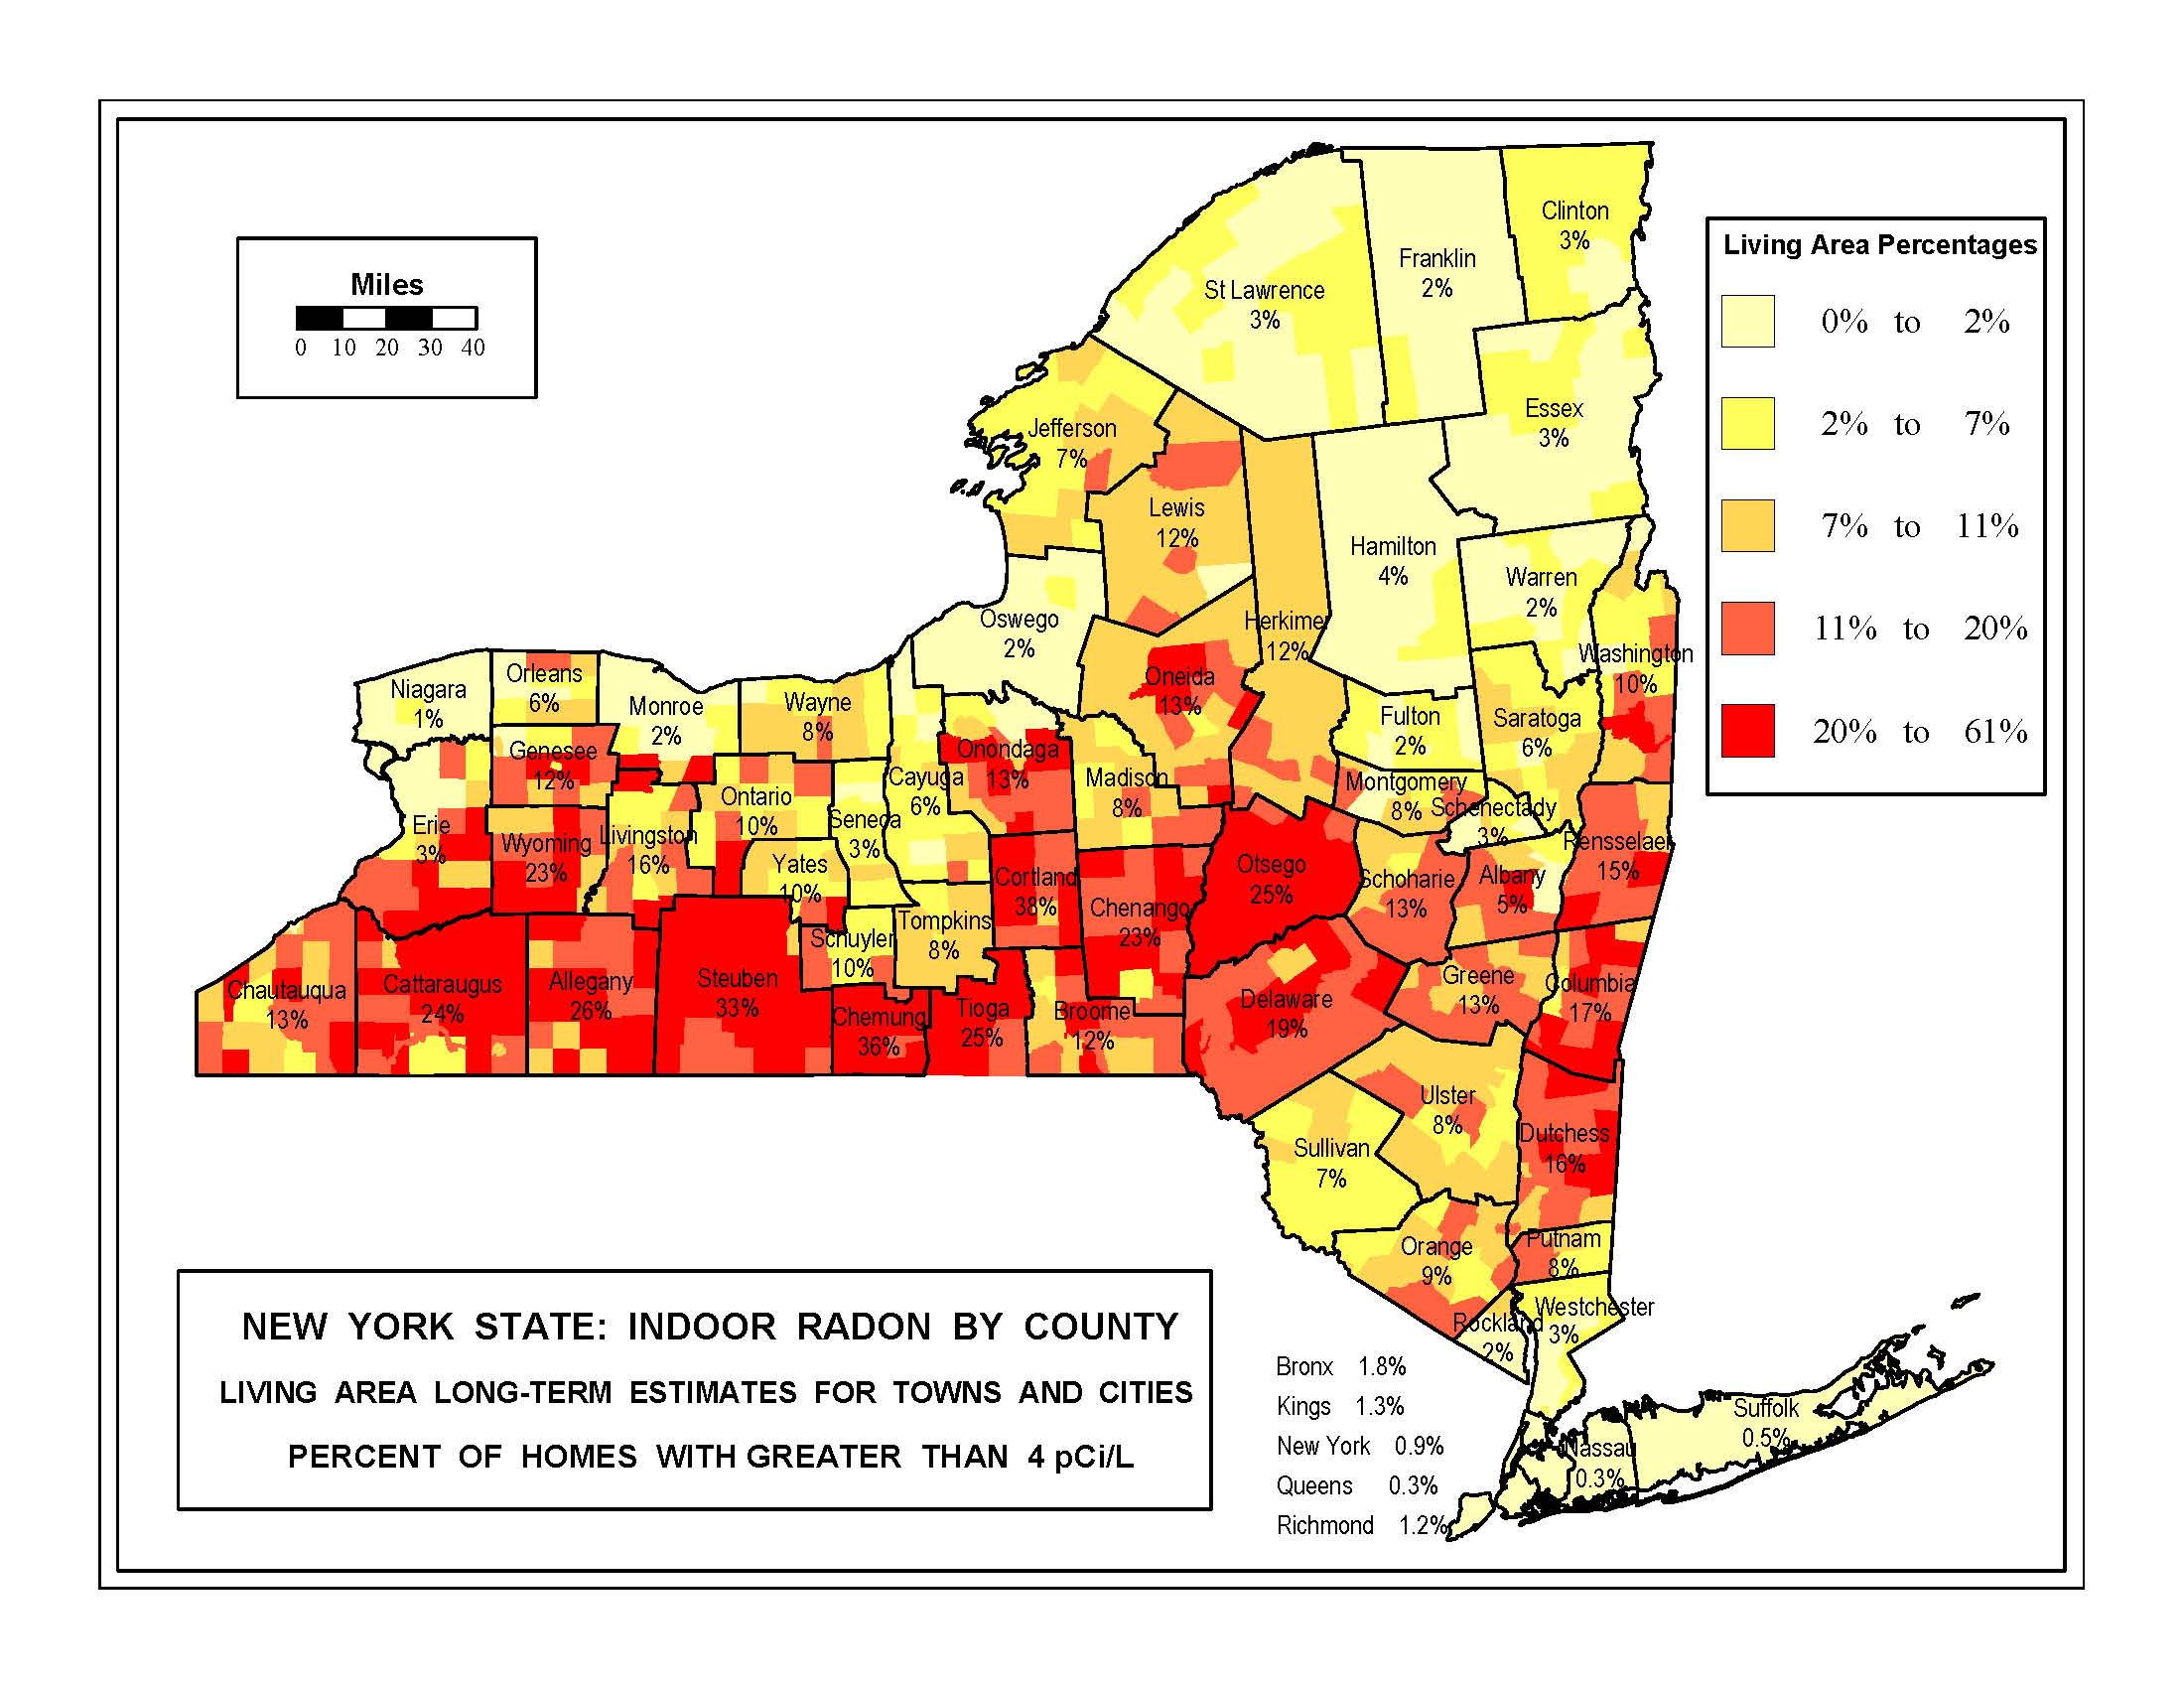 New York State Living Long Term Radon